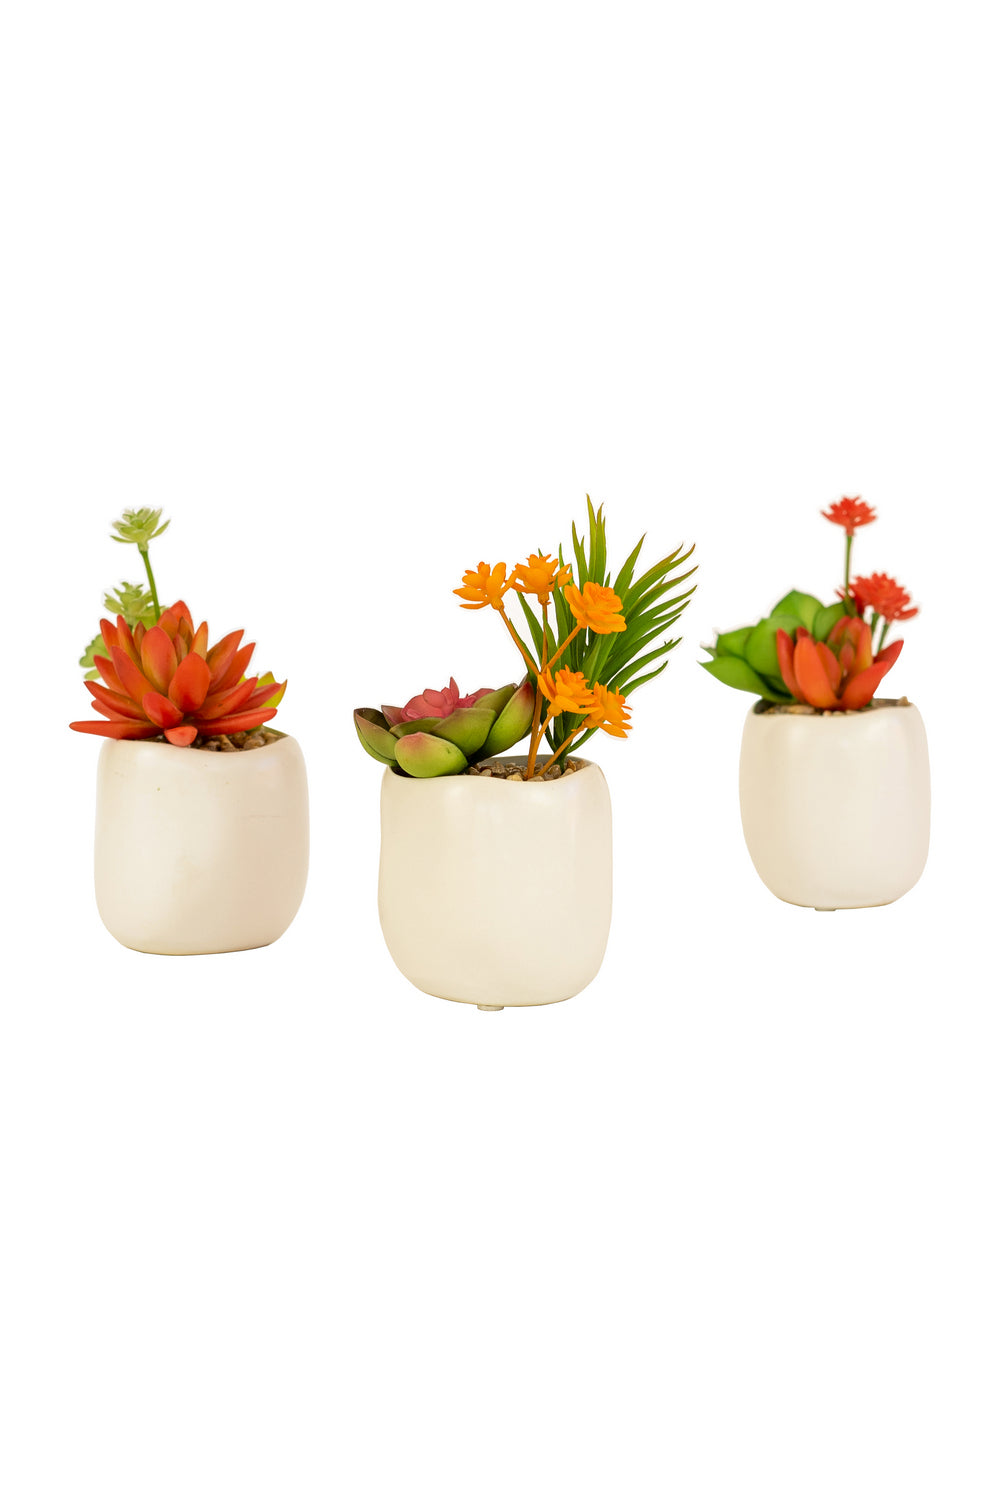 Kalalou Lighting CYF1349  Set Of Three Succulent Plants In A White Pot Home Decor White